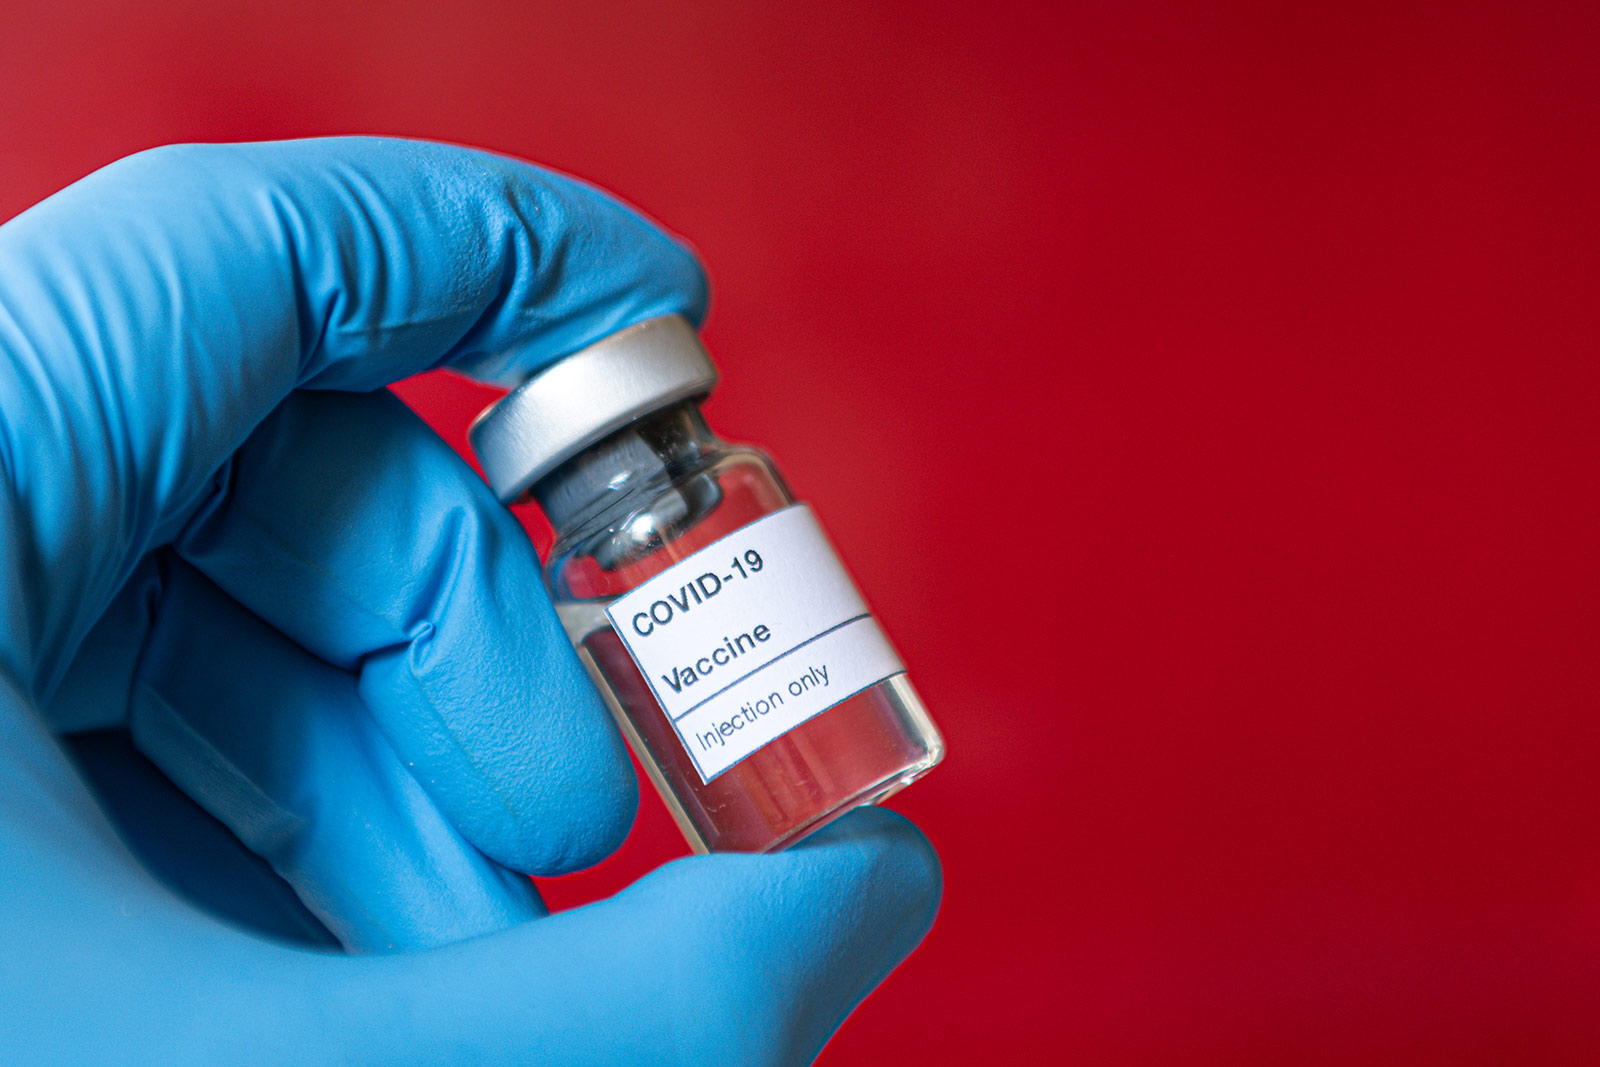 AstraZeneca’s Covid-19 Vaccine Cleared by EU